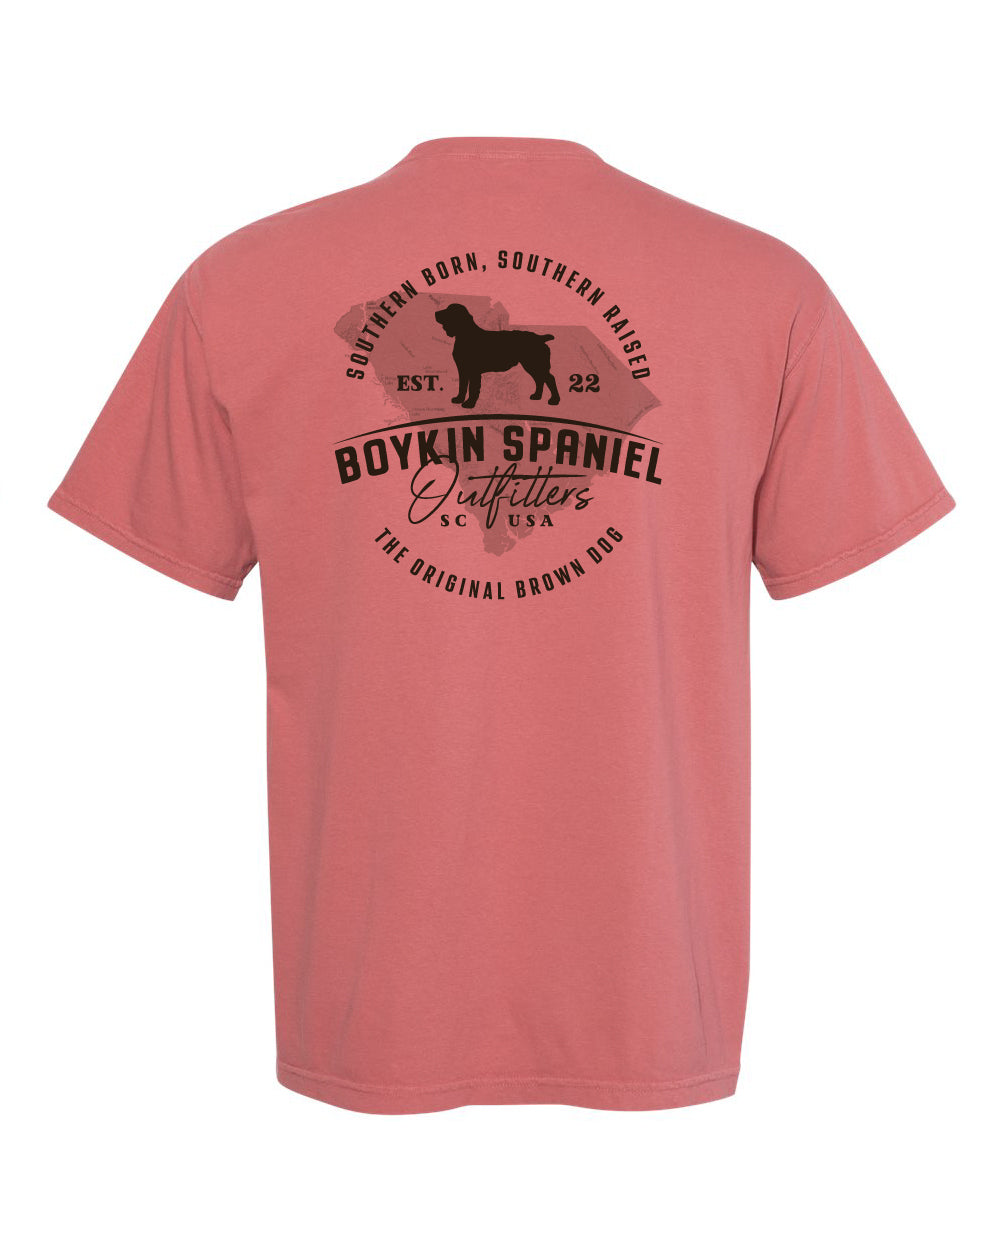 South Carolina's Original Brown Dog - Boykin Spaniel Short Sleeve 100% Cotton Heavyweight Pocket Tee